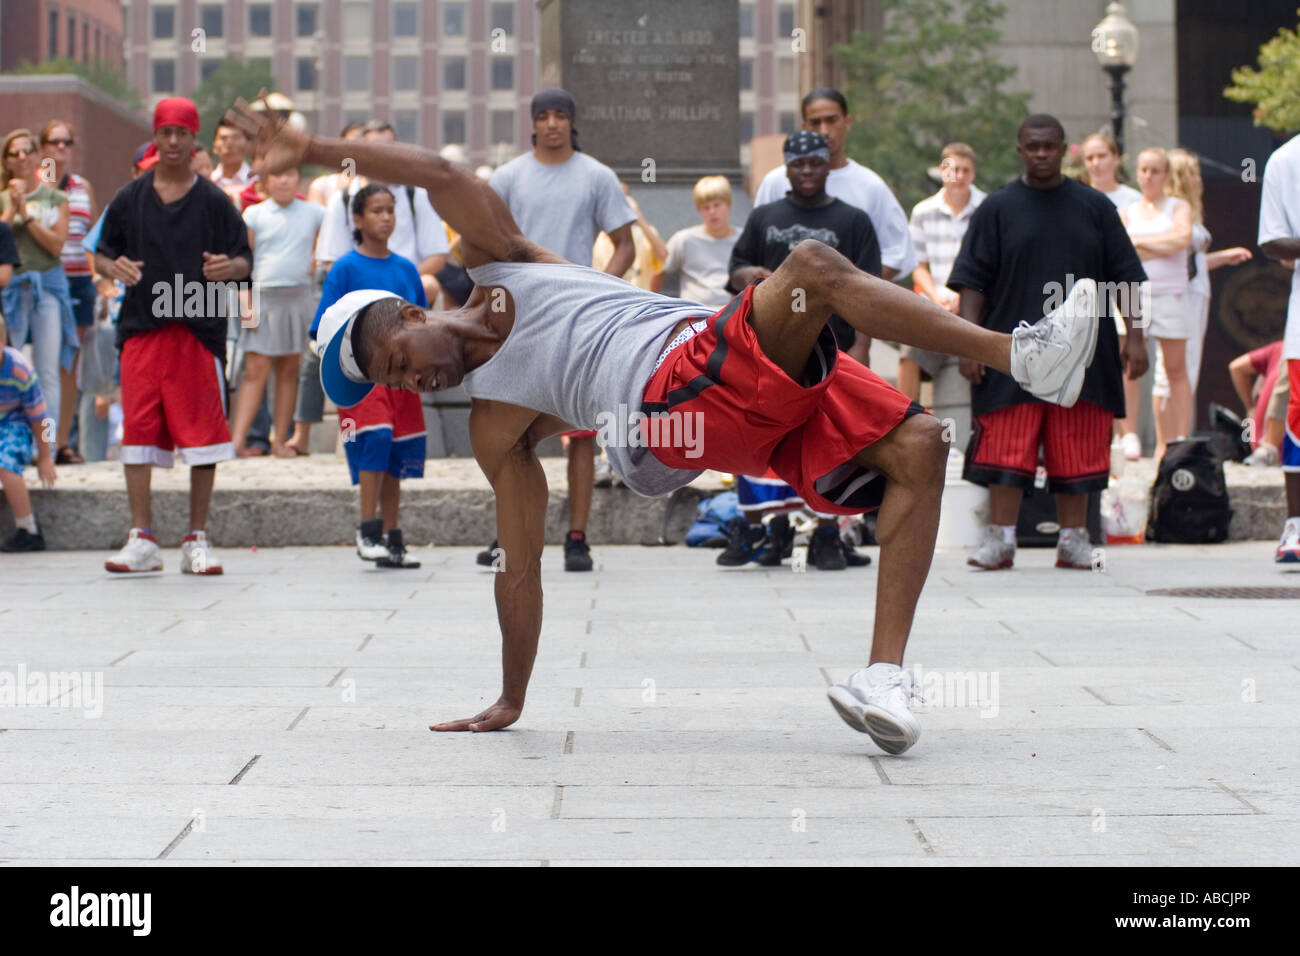 A street performer breakdances in Boston, Massachusetts. Stock Photo